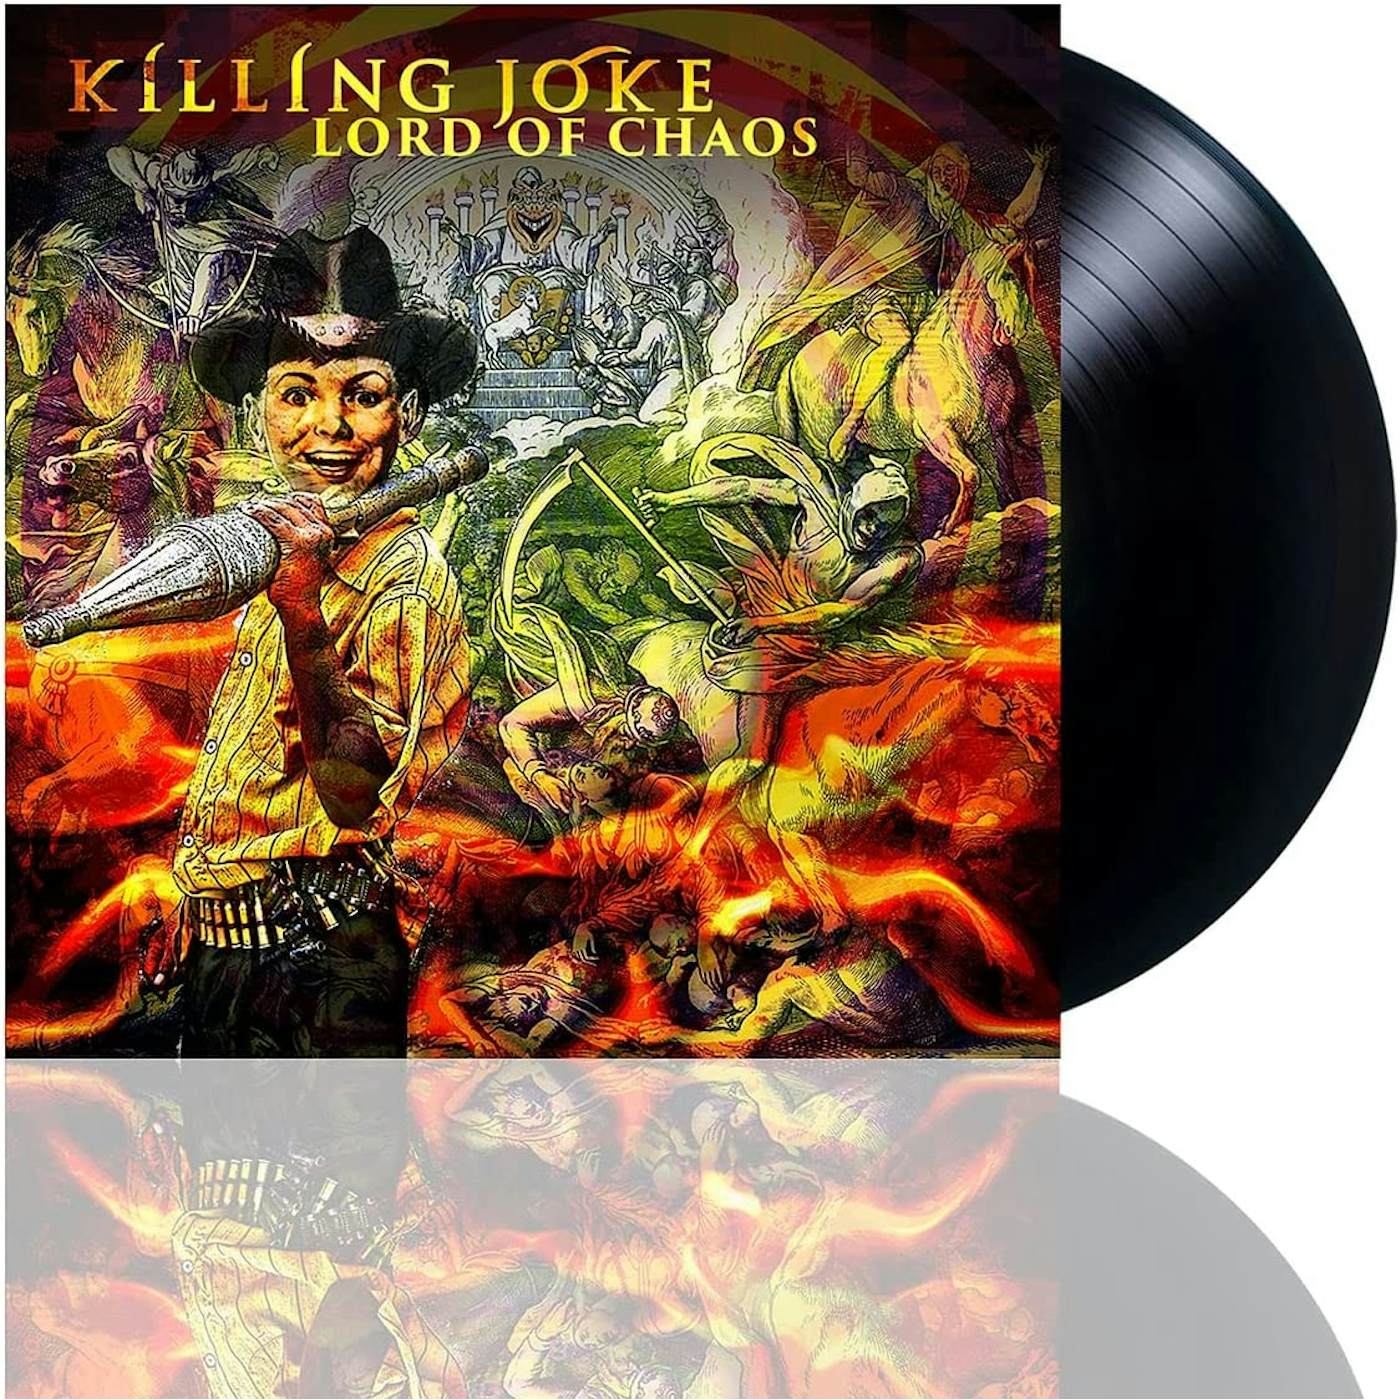 Killing Joke - Lord Of Chaos EP